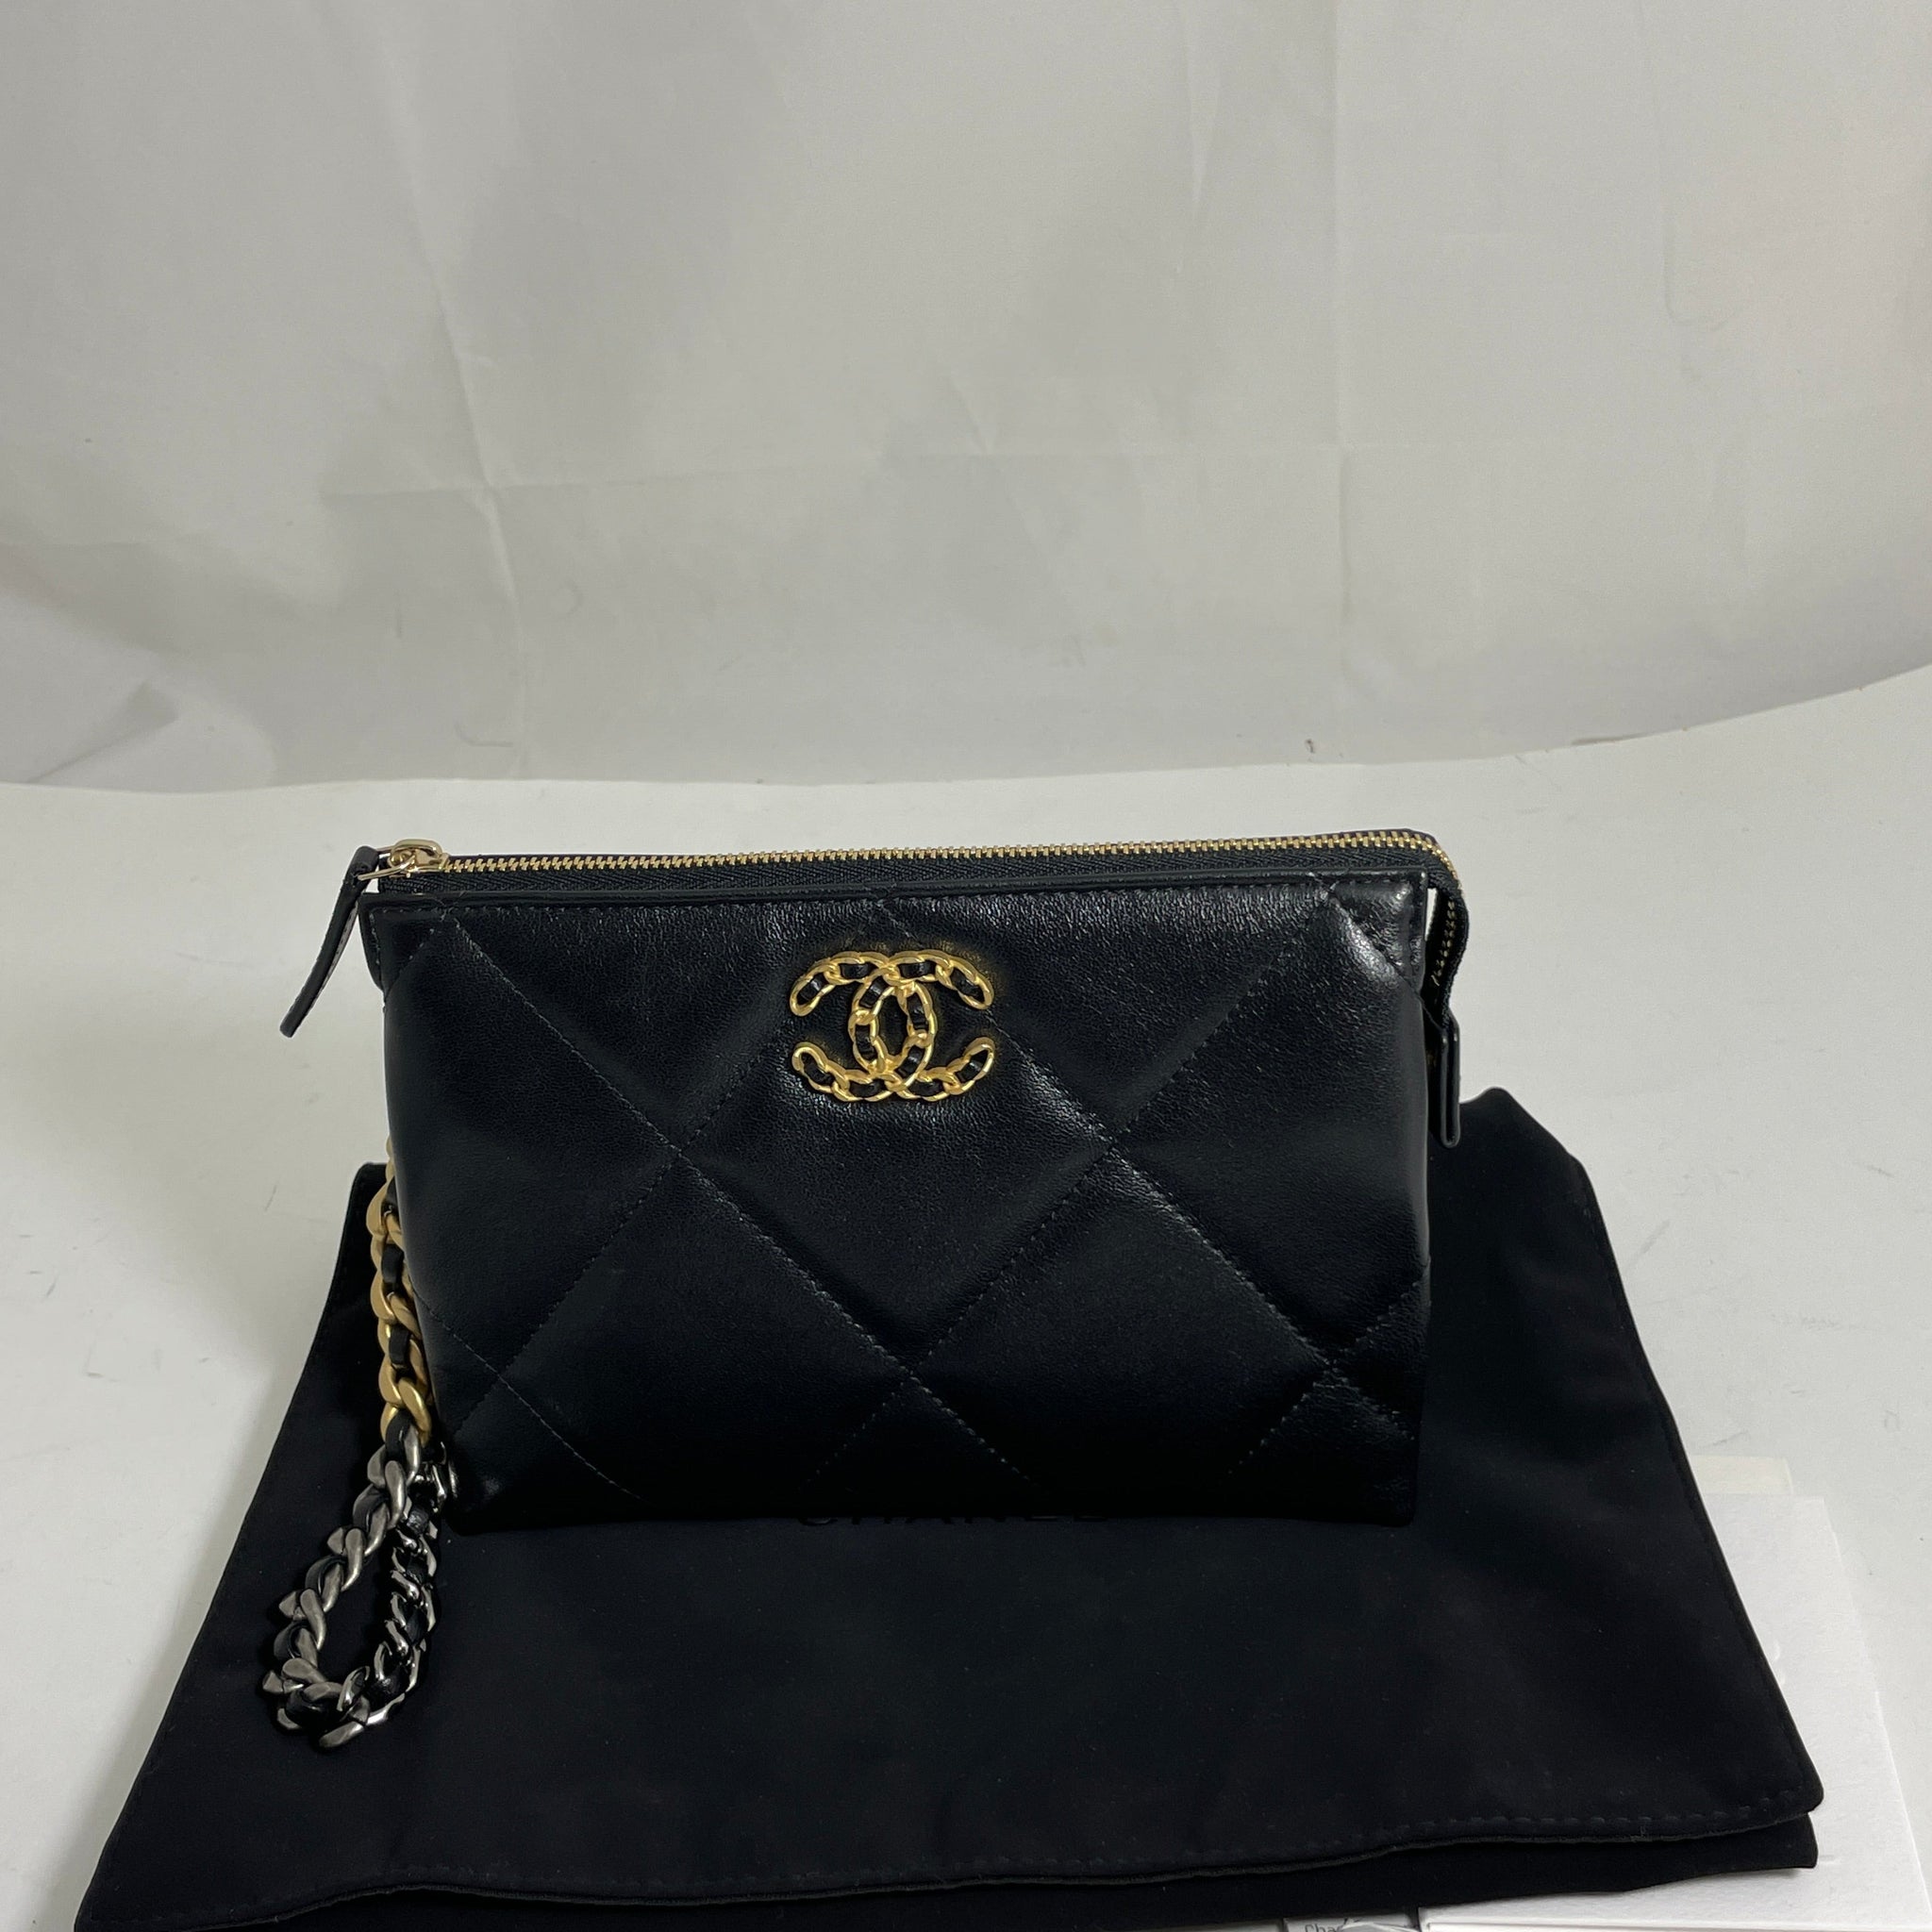 Chanel 19 leather clutch bag